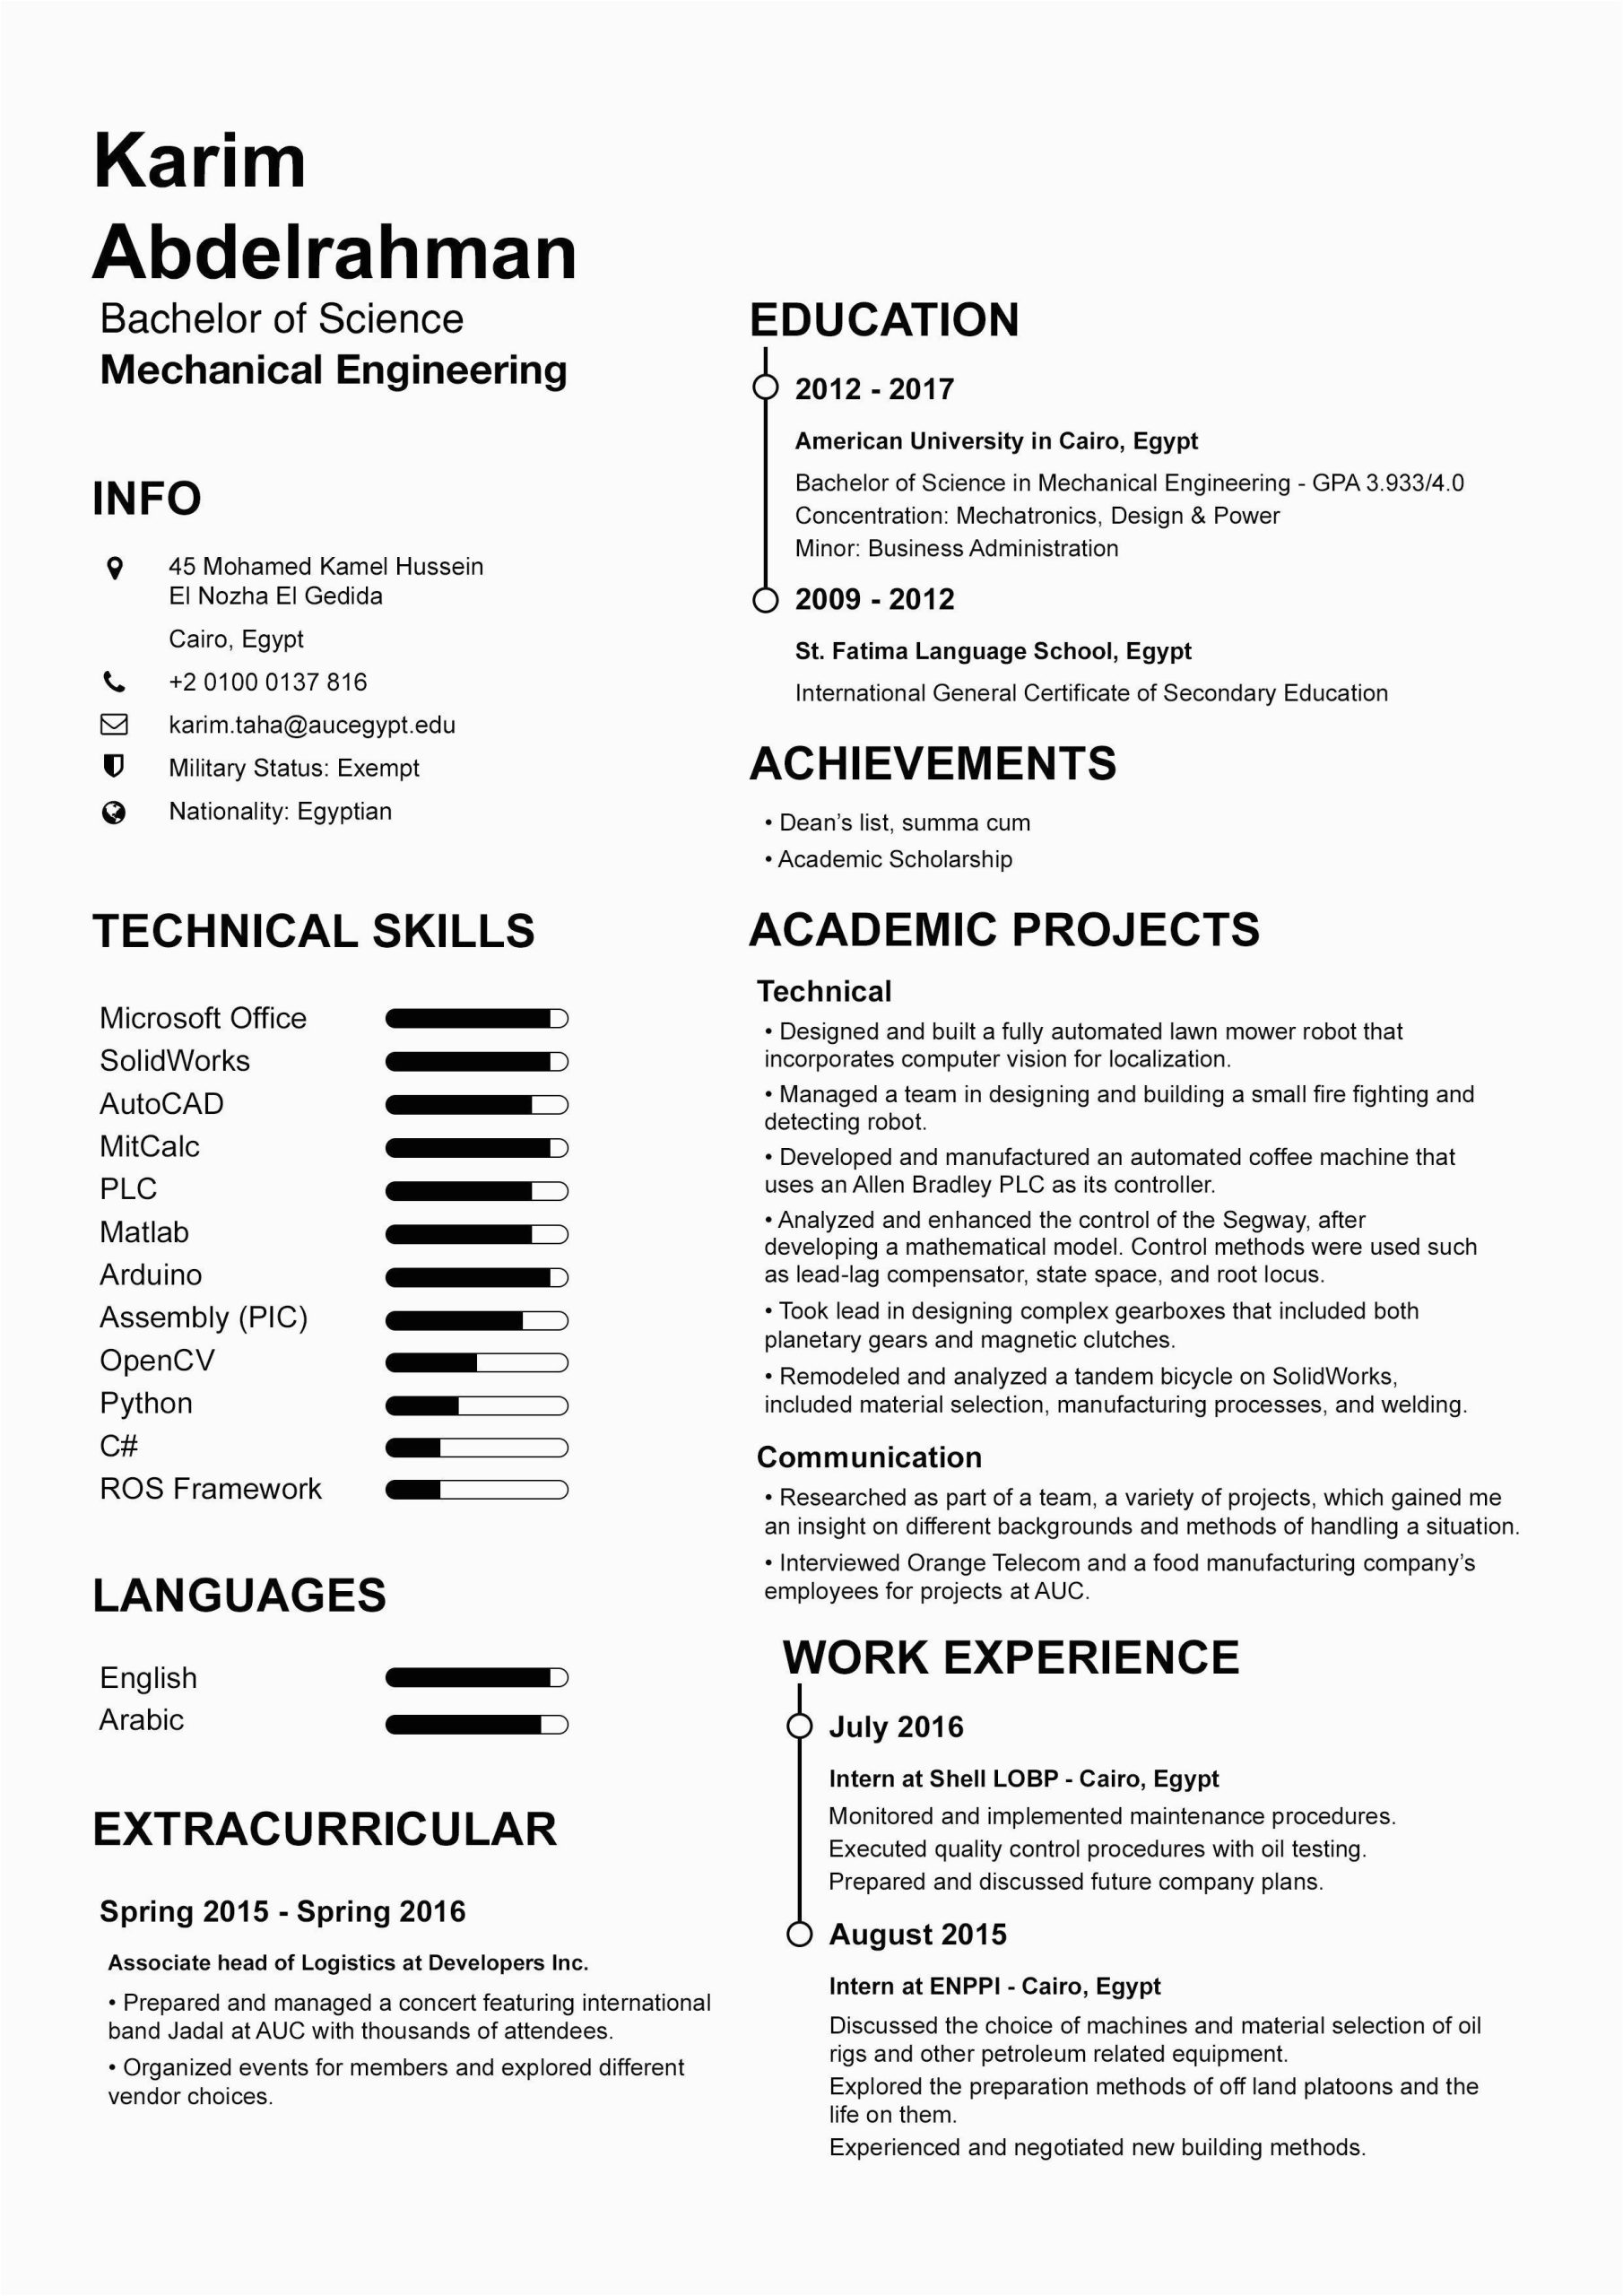 Fresh Graduate Mechanical Engineer Resume Sample Resume for A Fresh Mechanical Engineering Graduate is This too Weird